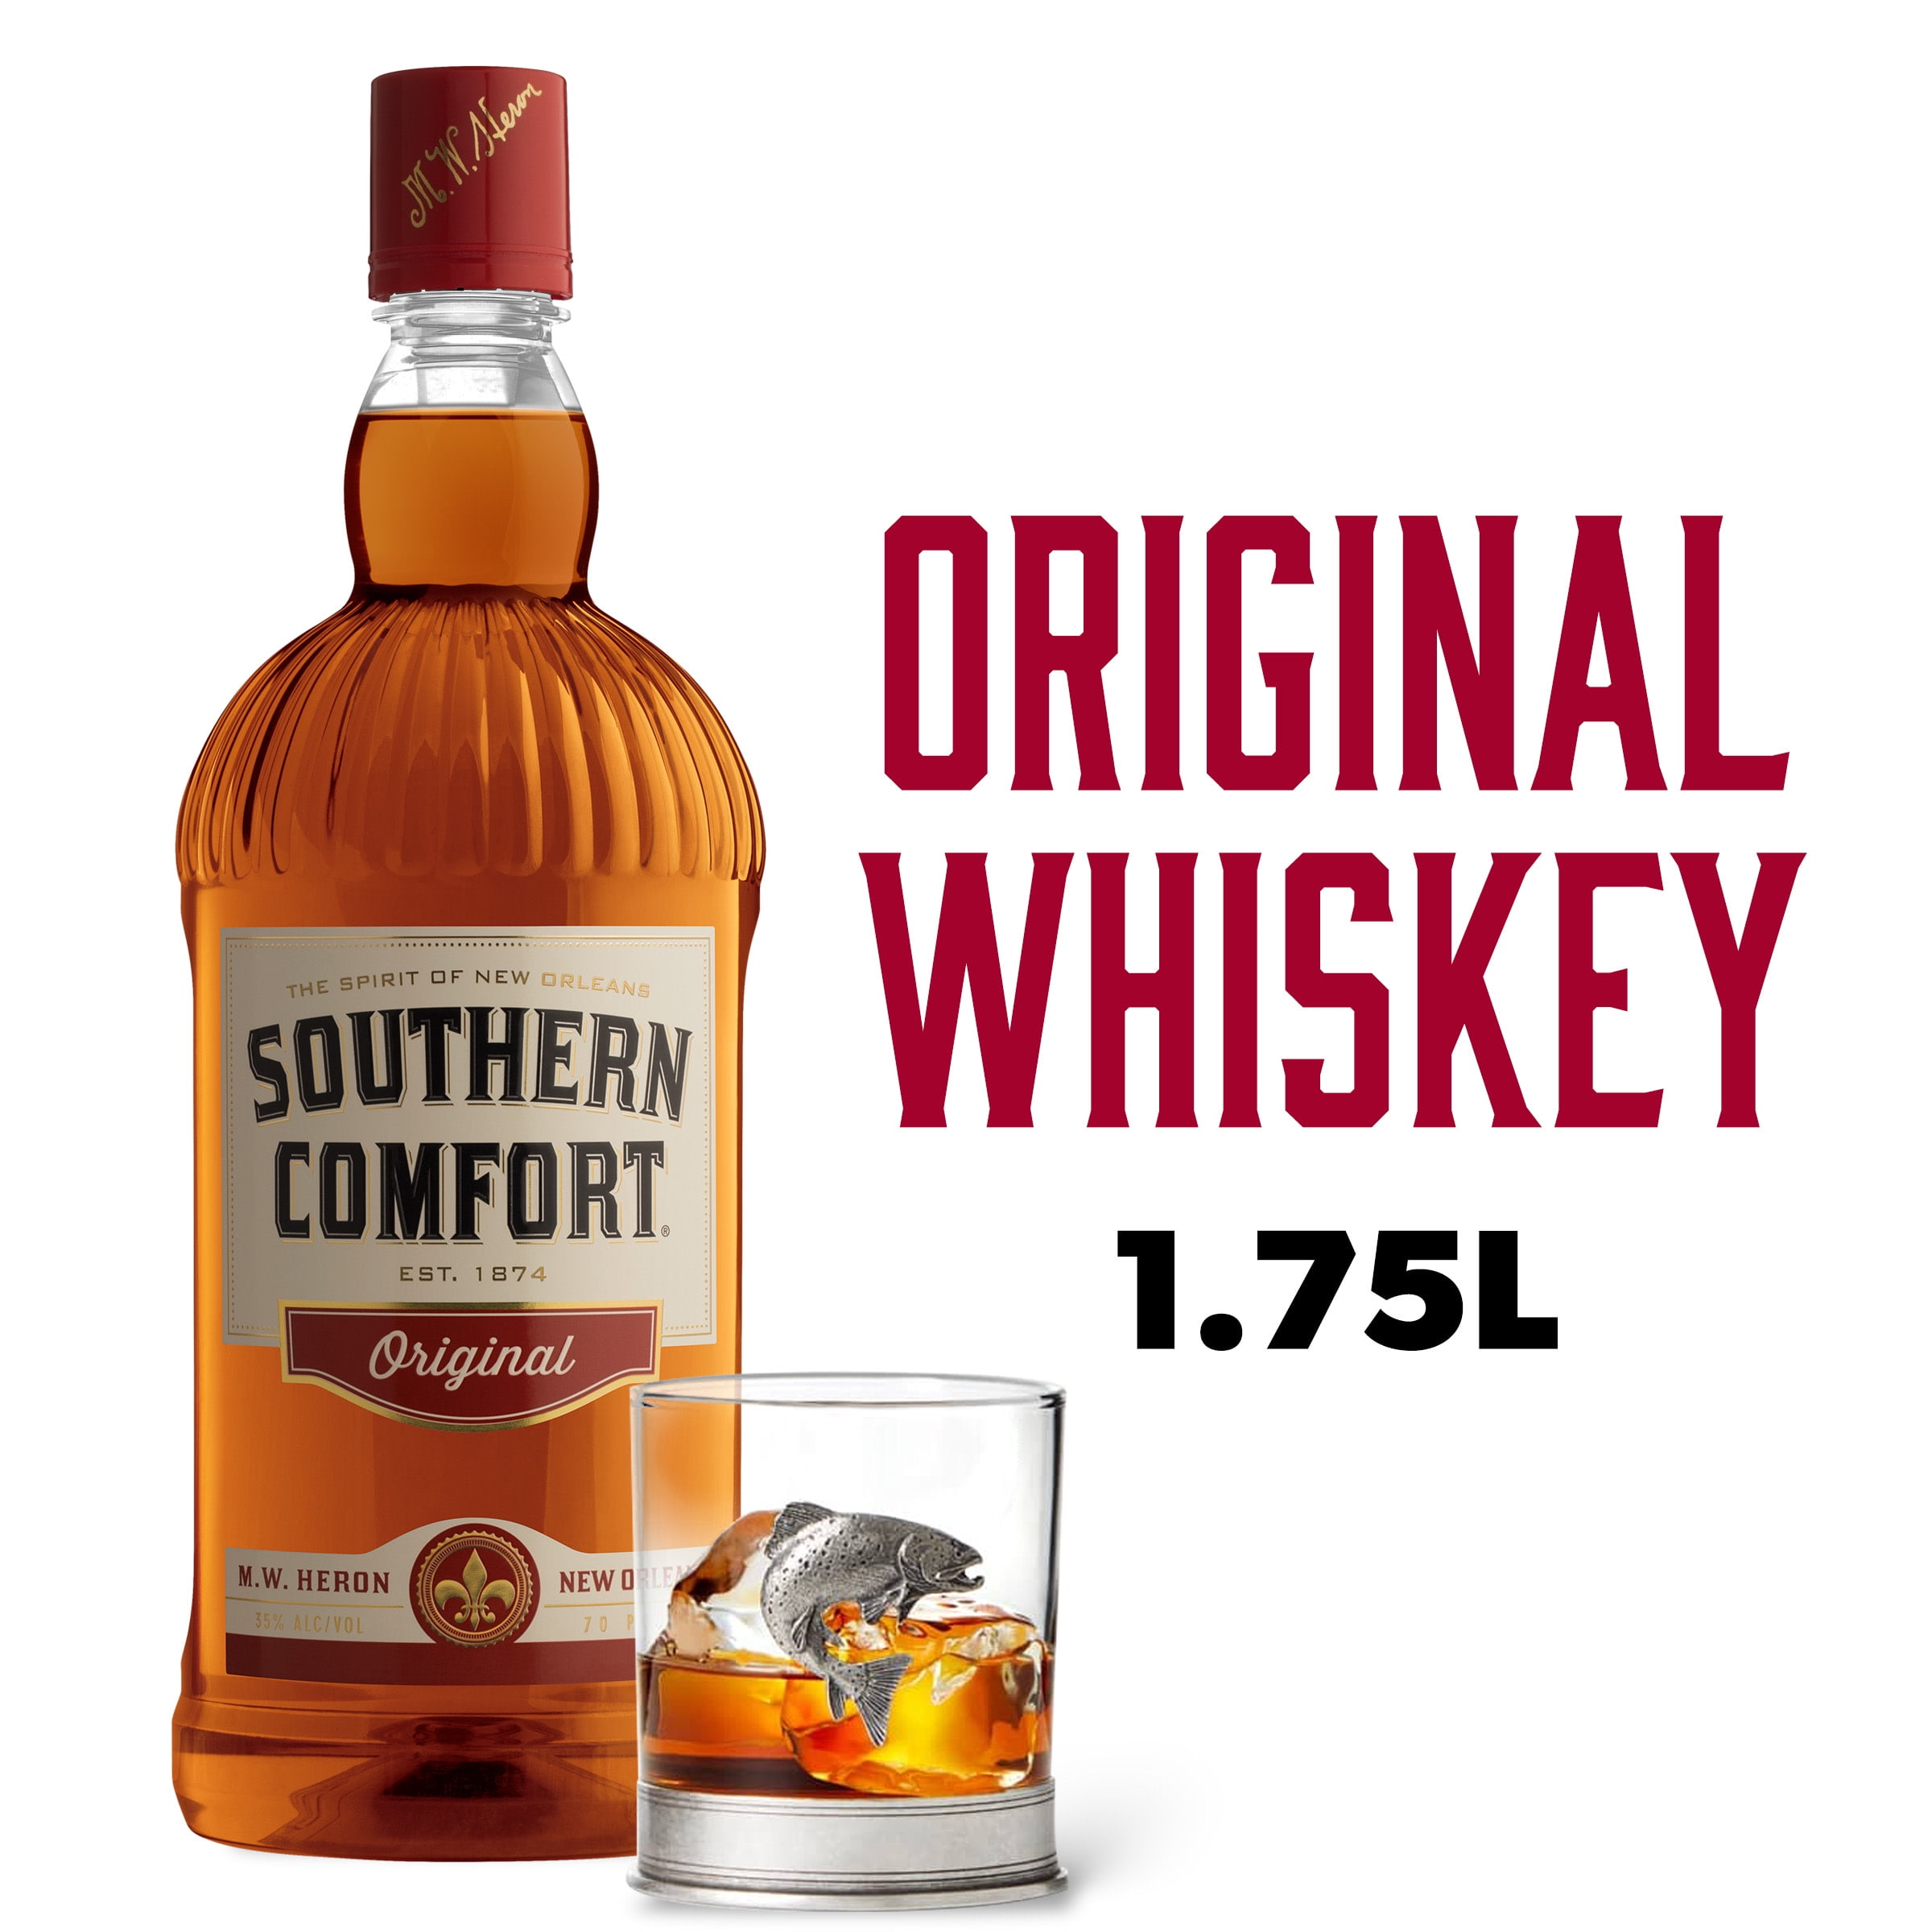 1.75L Alcohol Whiskey, Liquor, Original Comfort 35% Southern